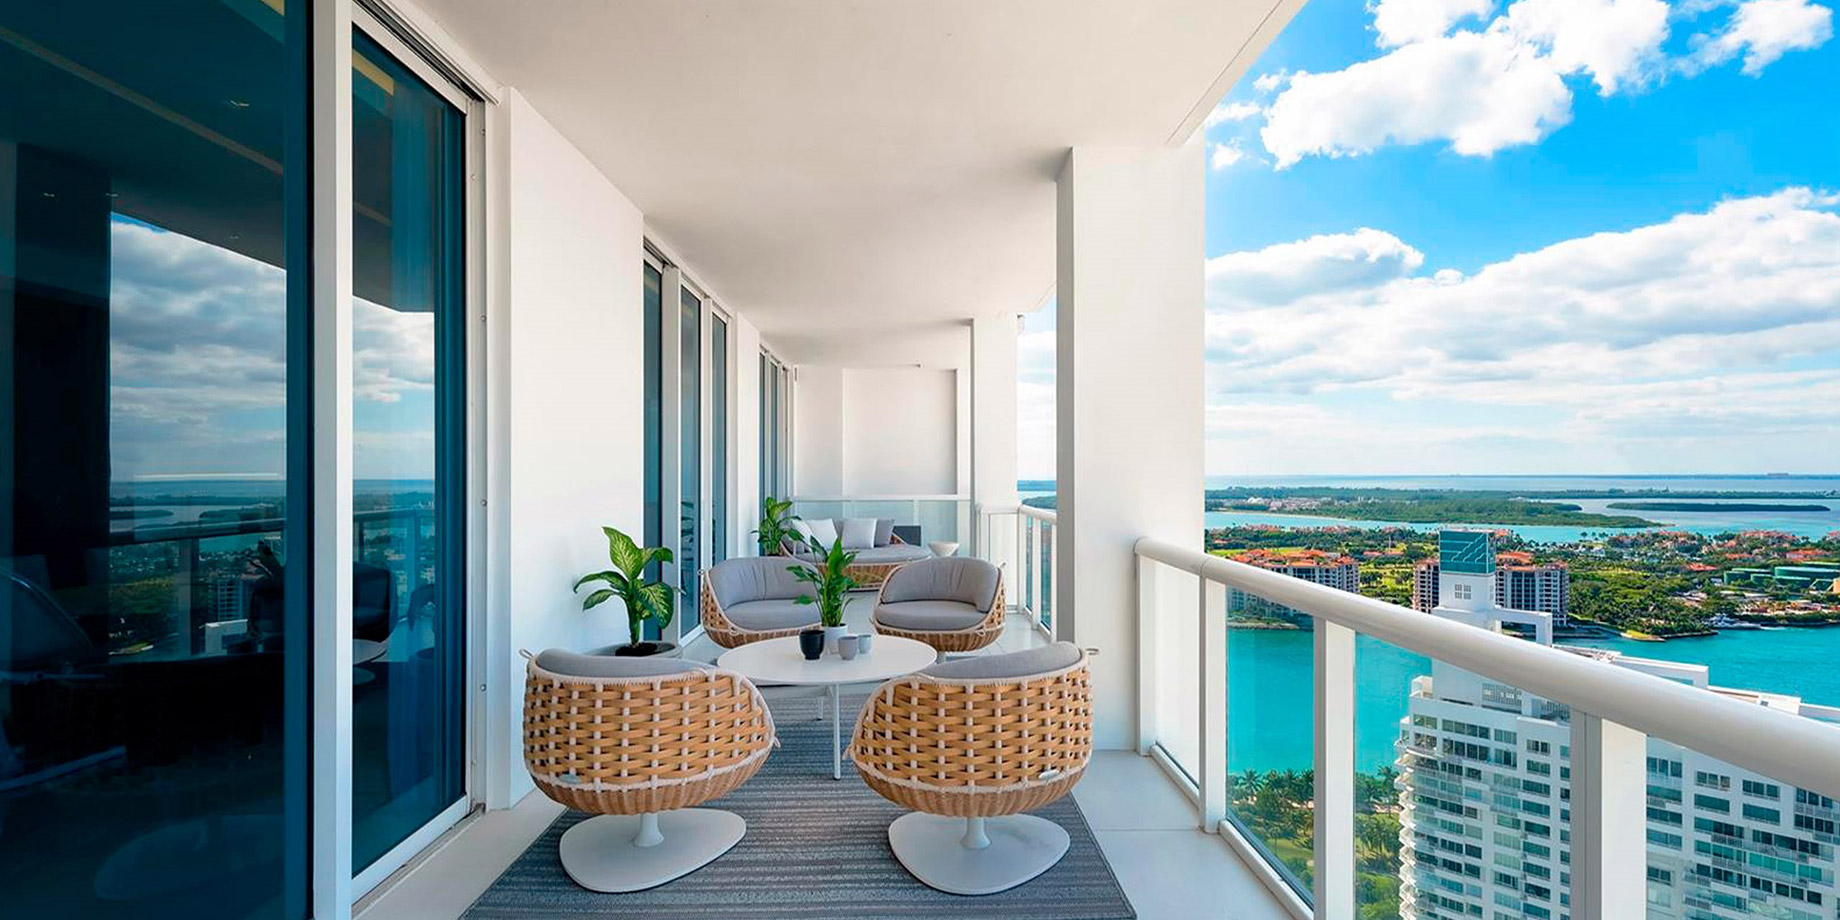 Balcony - Continuum Luxury Condos - South Beach, Miami, Florida